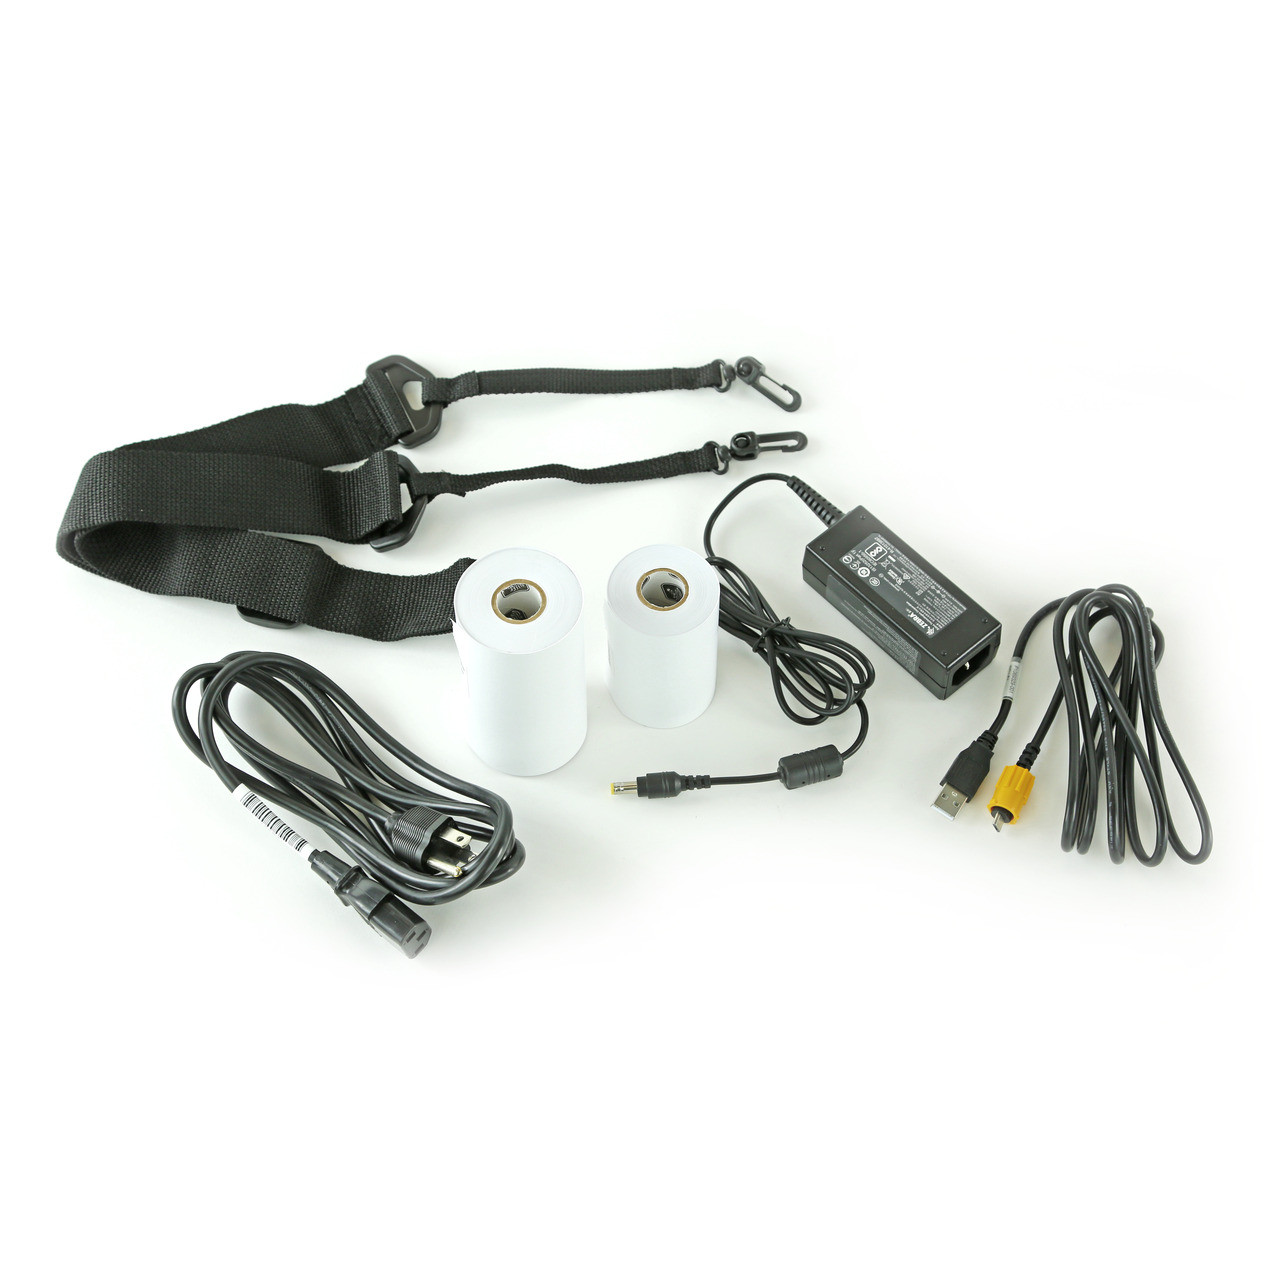 Zebra P1063406 023 Demo Kit For Zq500 Series 2157